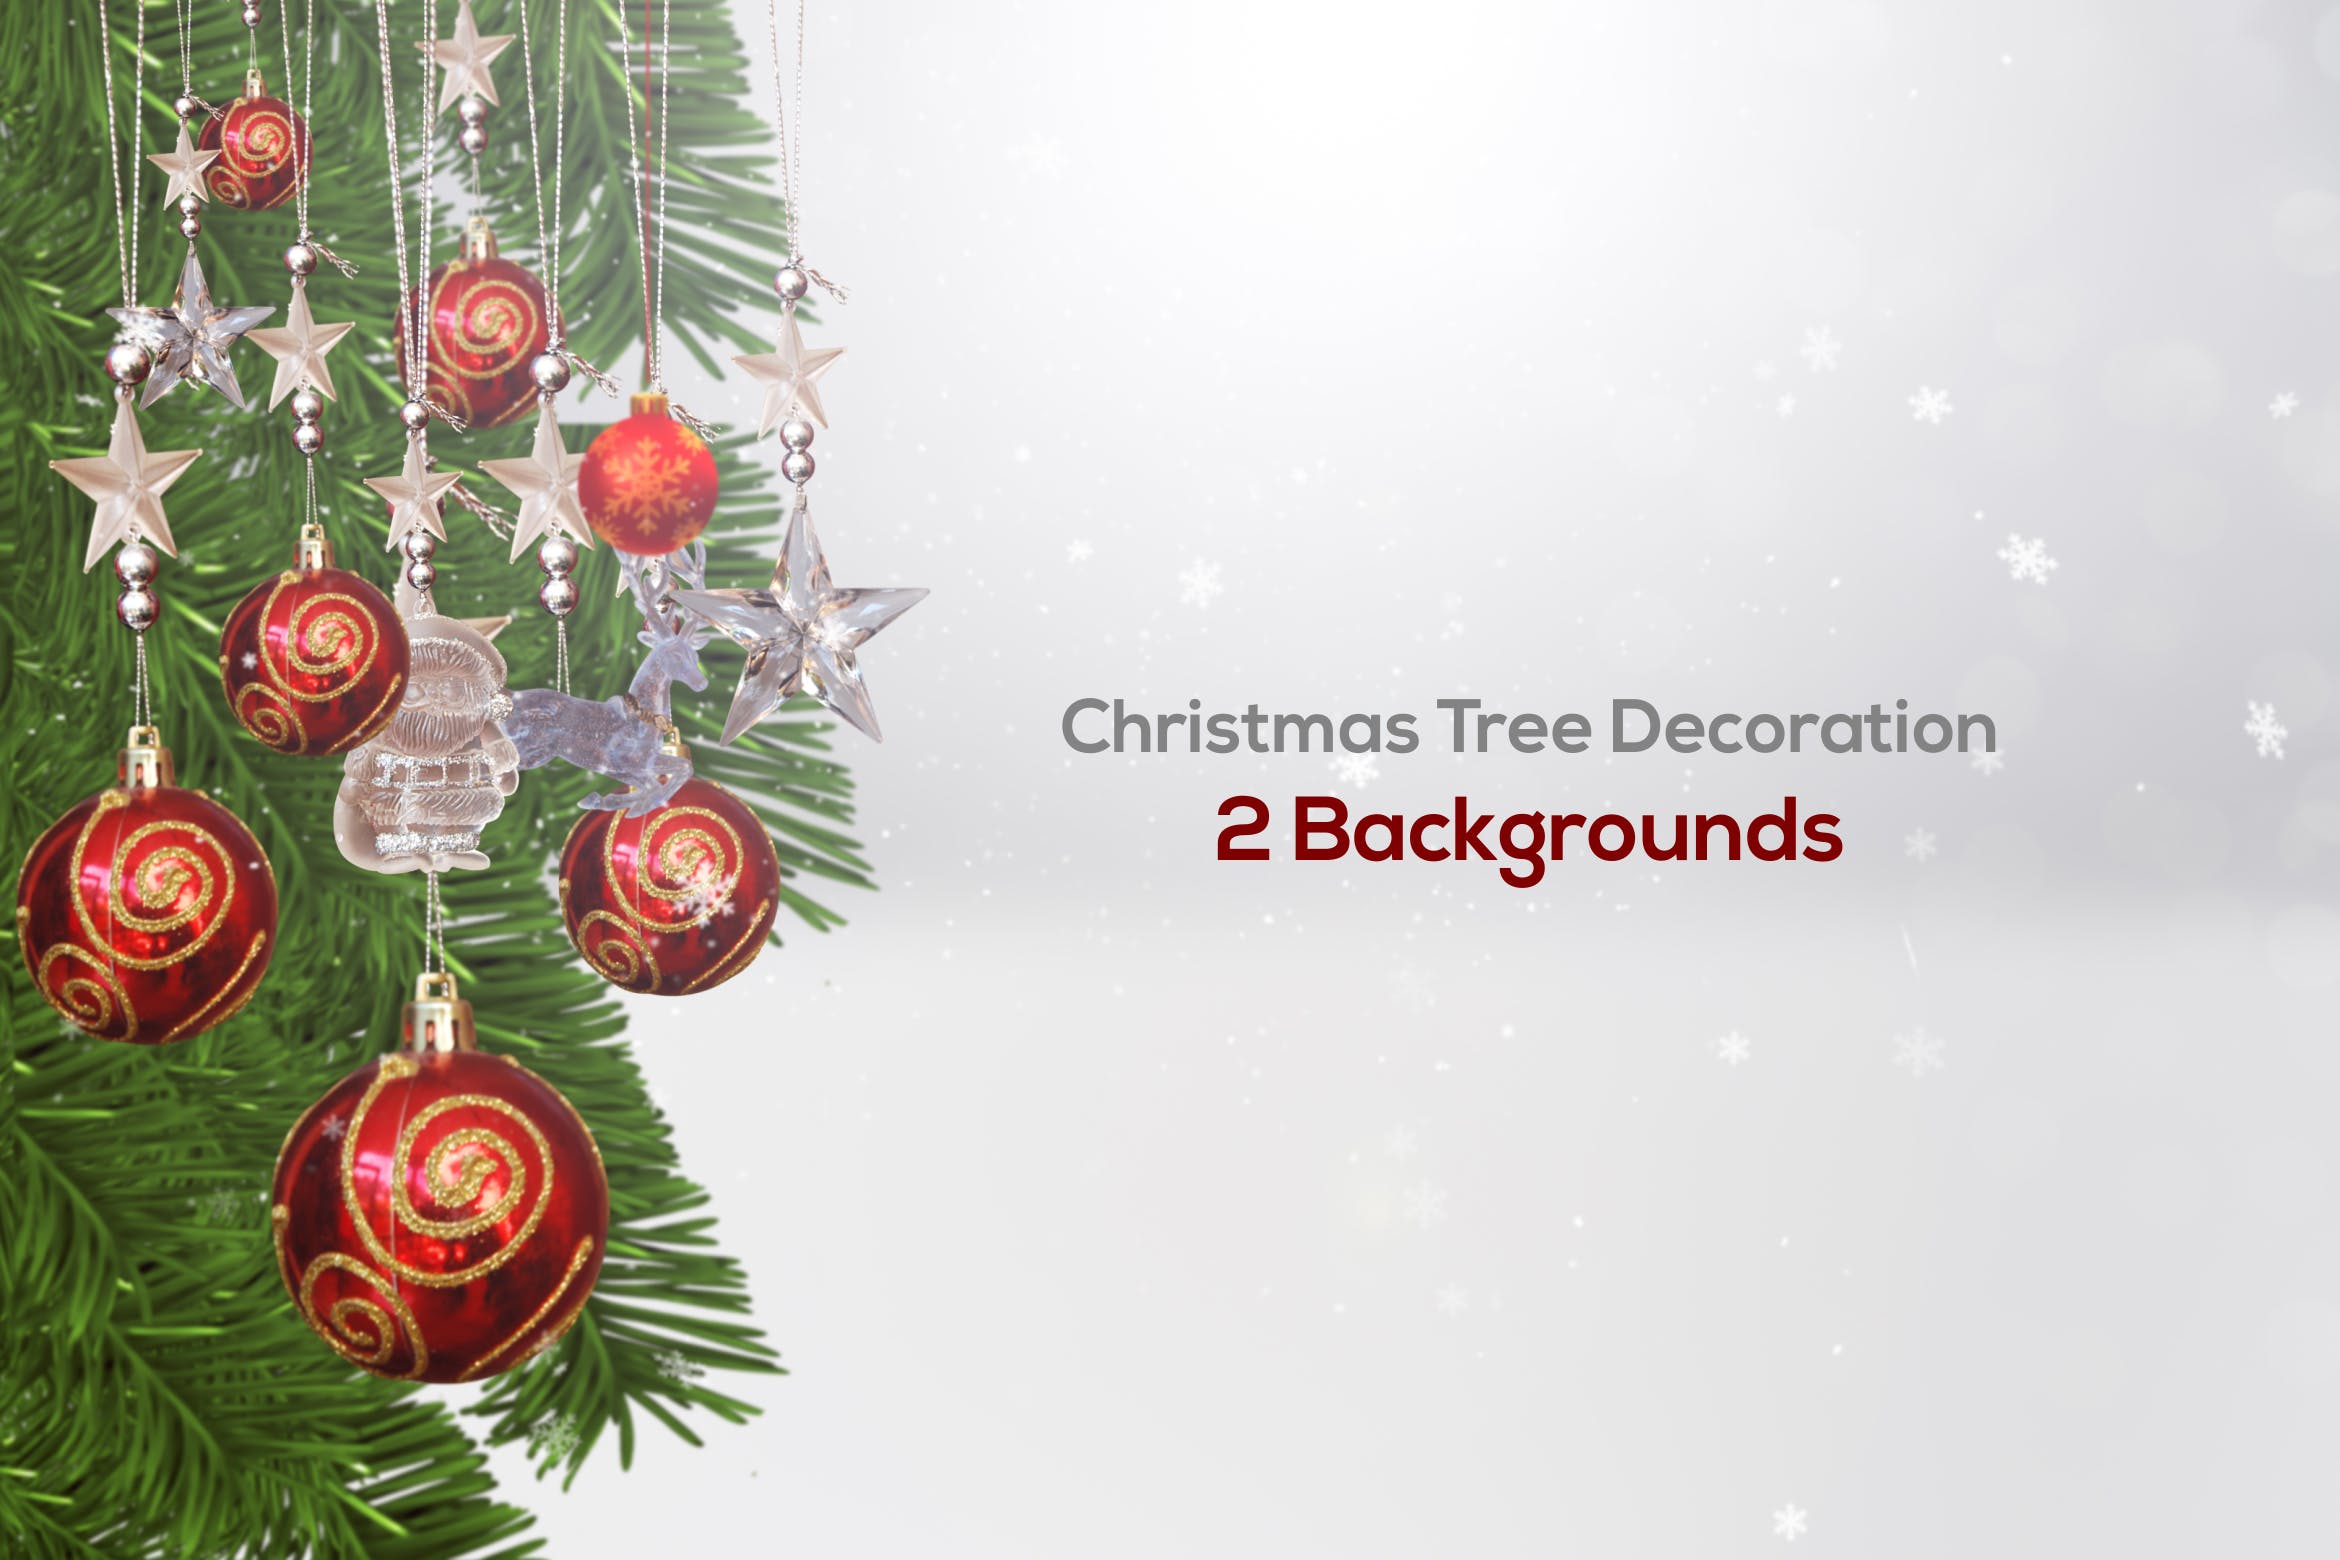 4K分辨率圣诞树装饰品背景图片素材 Christmas Tree Decorations插图